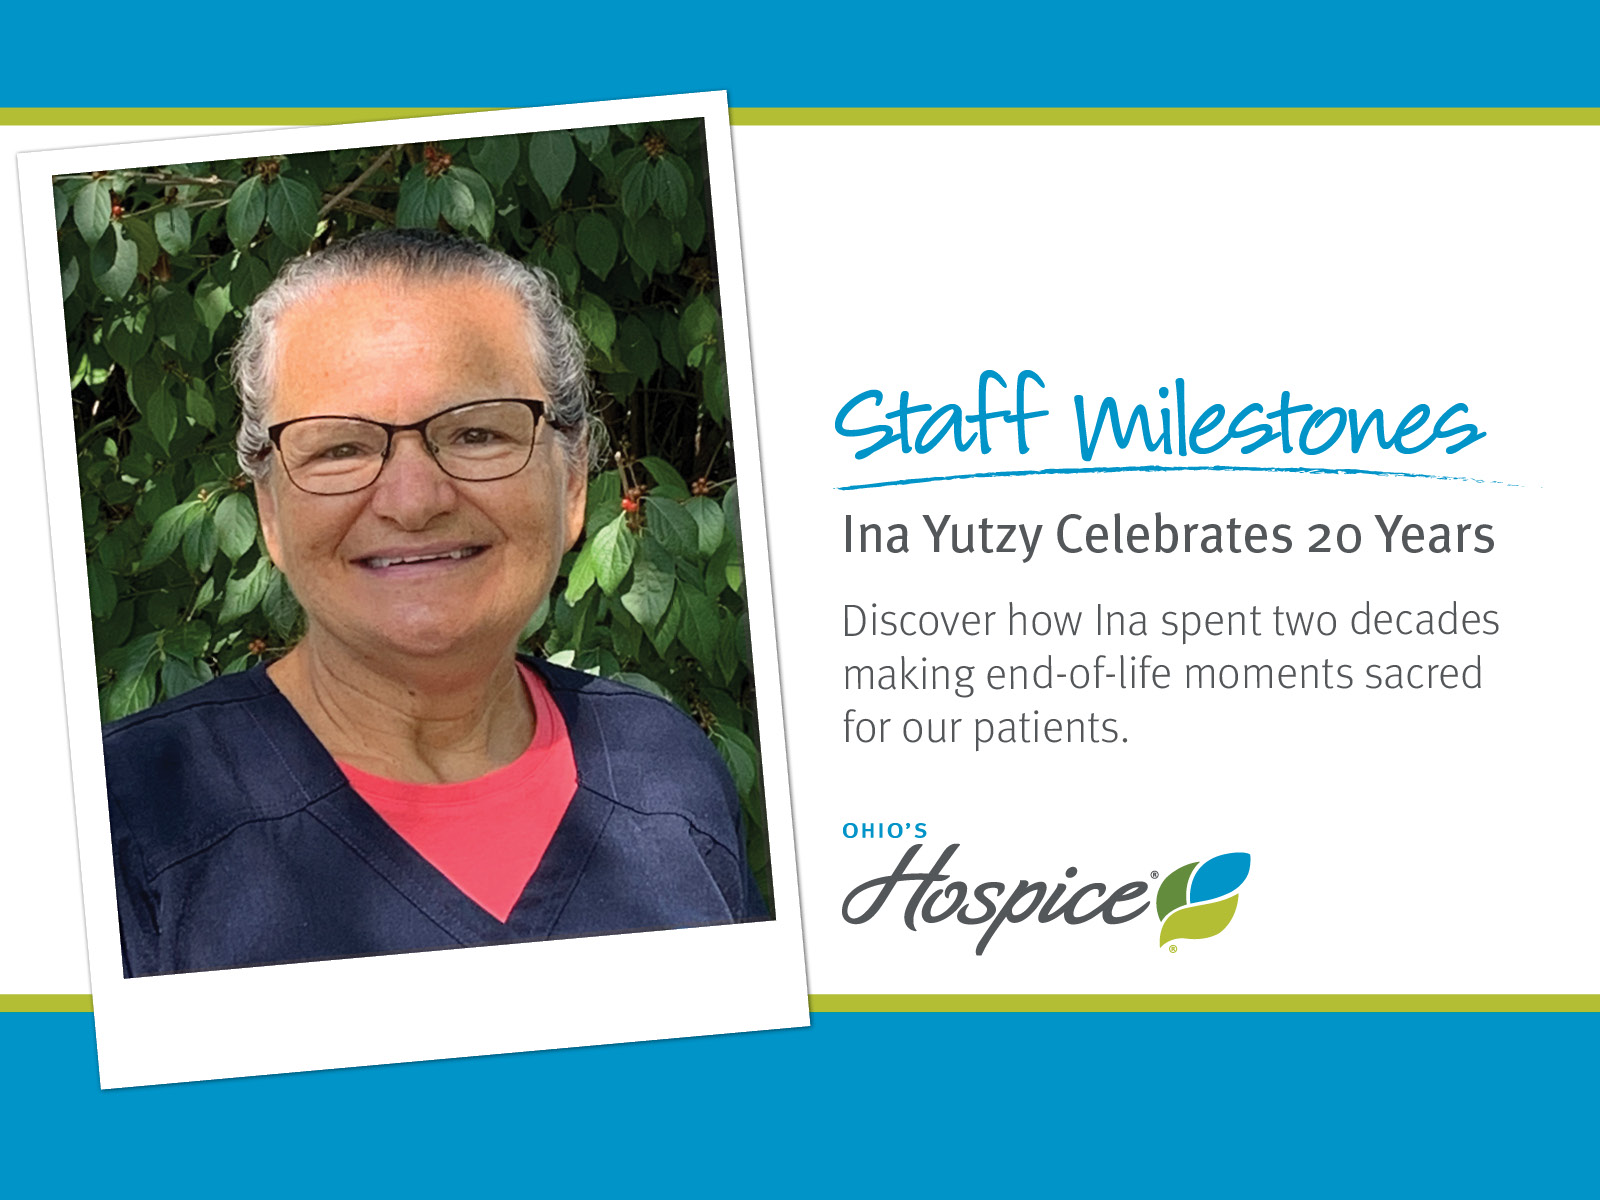 Staff Milestones. Ina Yutzy Celebrates 20 Years. Ohio's Hospice.